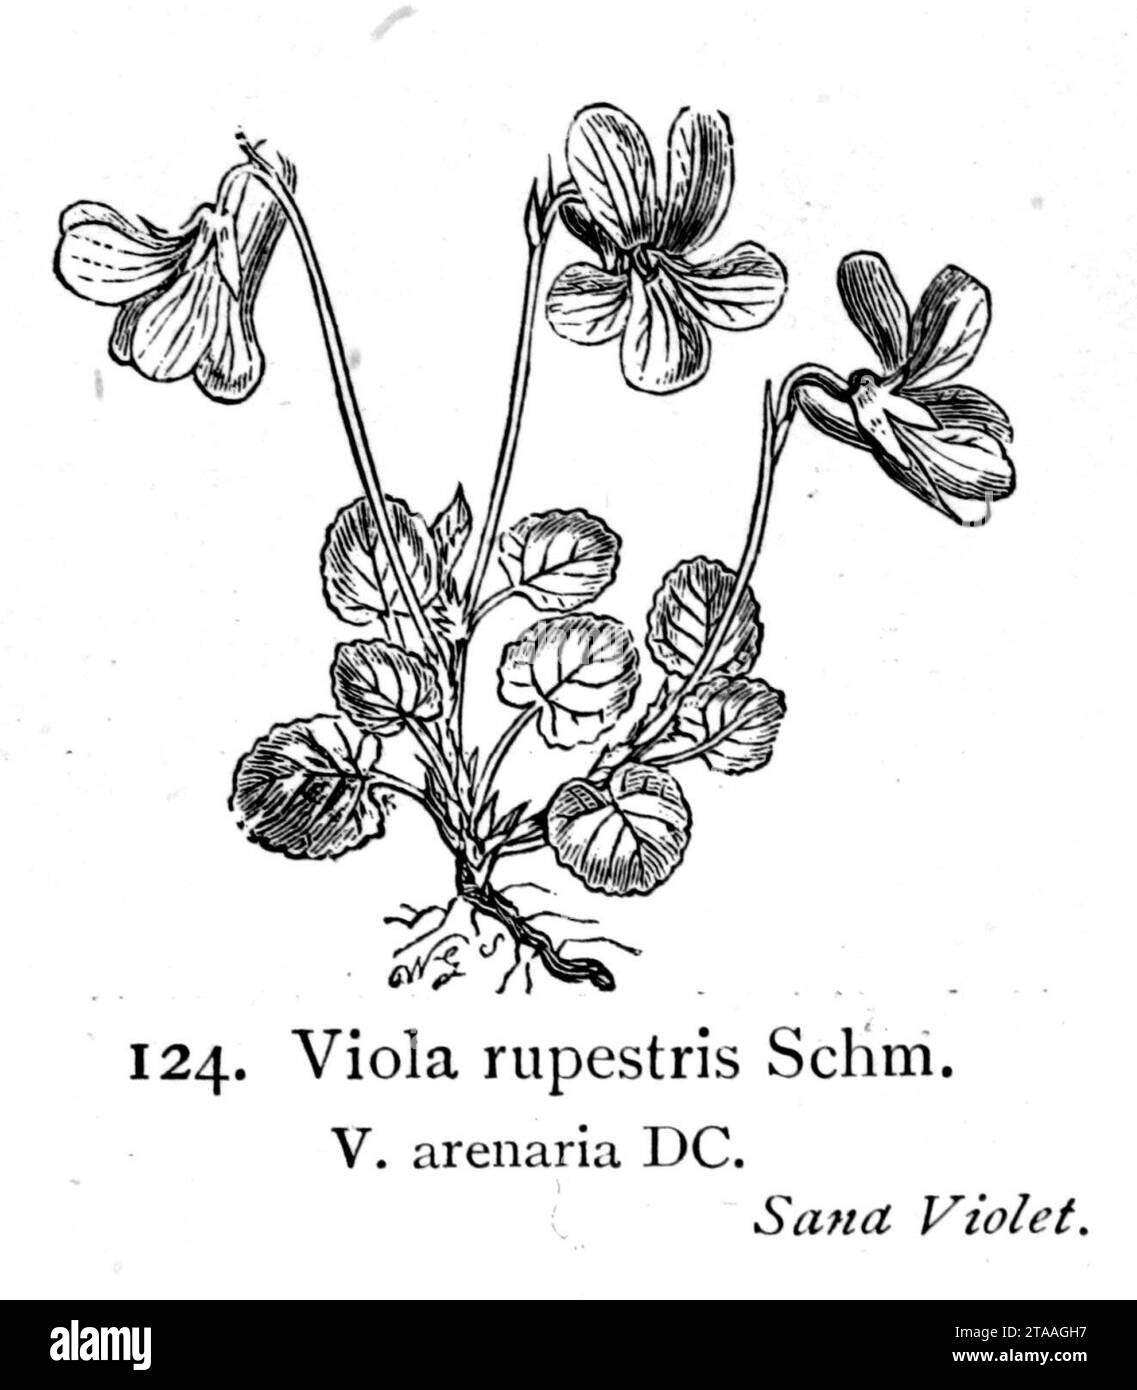 Viola rupestris lllustration (01). Stock Photo